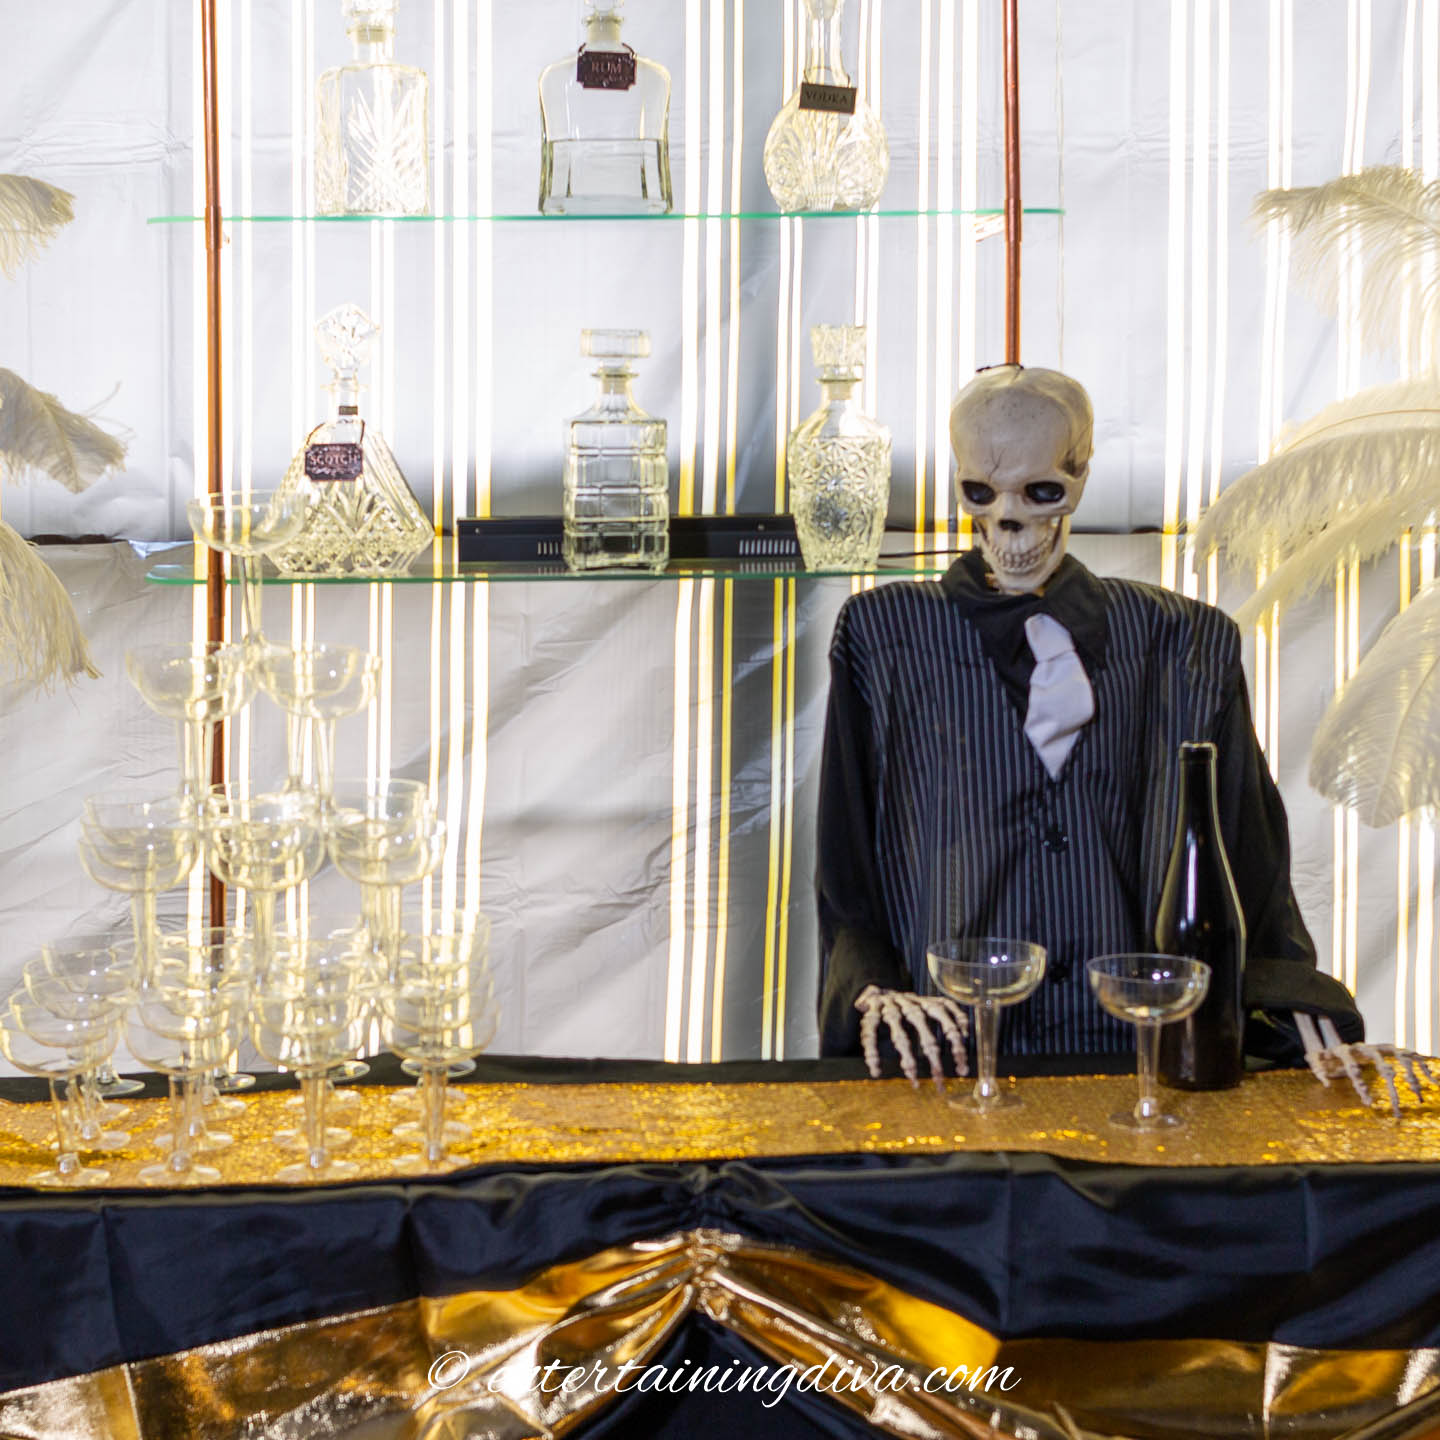 Skeleton bartender in front of a shelf with liquor bottles